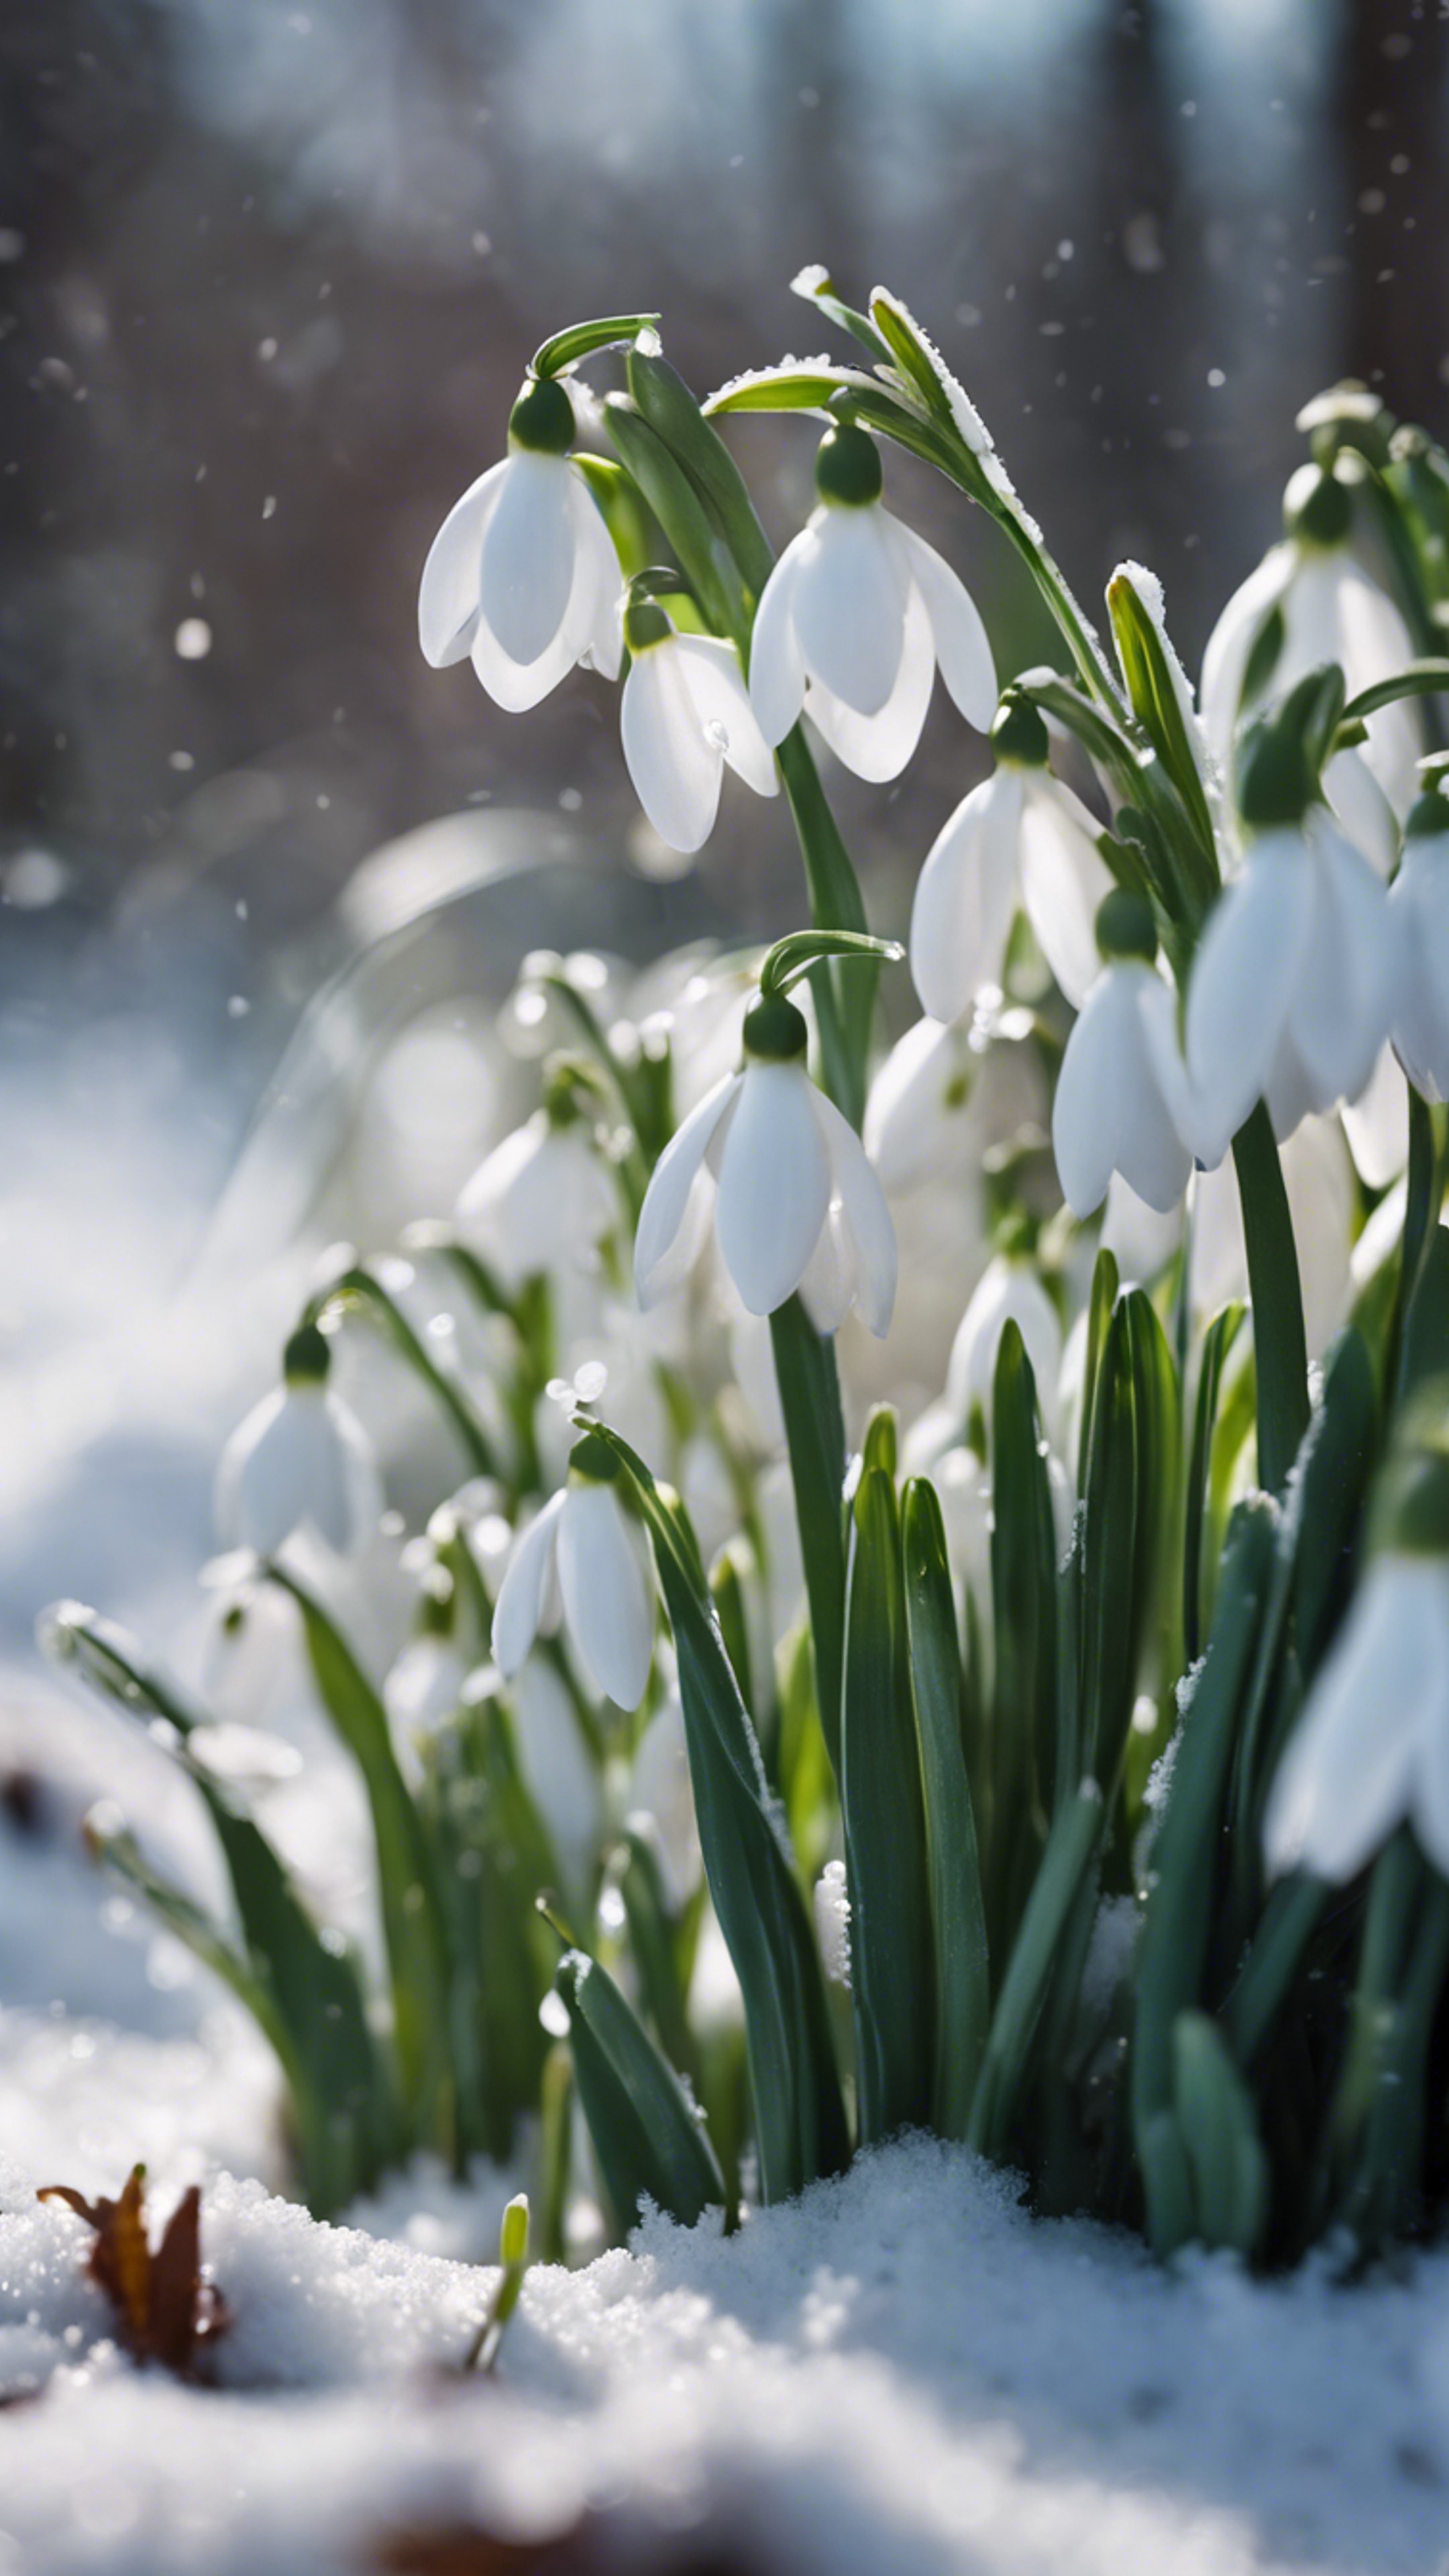 A patch of white snowdrops peeking through a dusting of late spring snow. duvar kağıdı[e64c535efd0a459c9840]